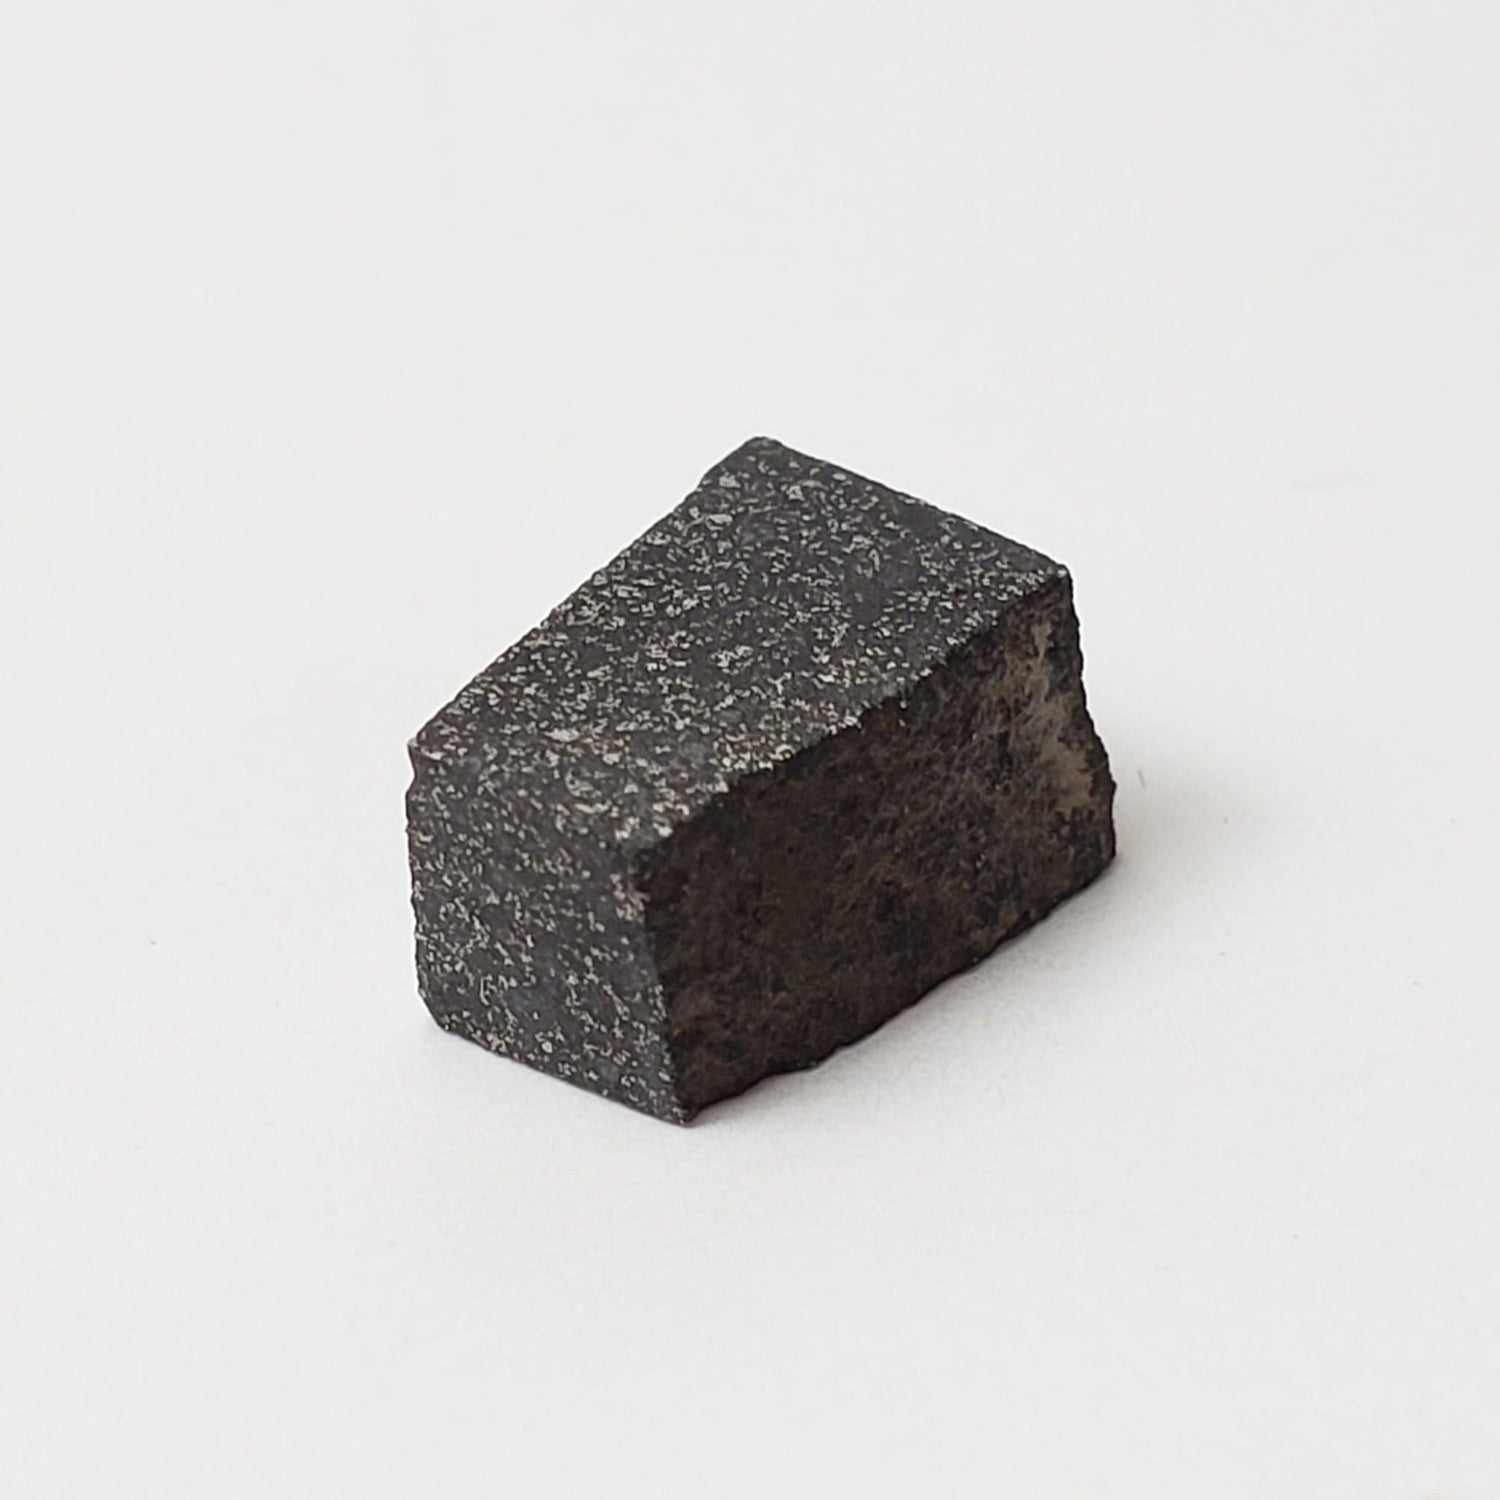 Abee Meteorite | 0.6gr | Part Slice | Rare Enstatite | EH4 Class | Observed Fall 1952 Canada | Canagem.com